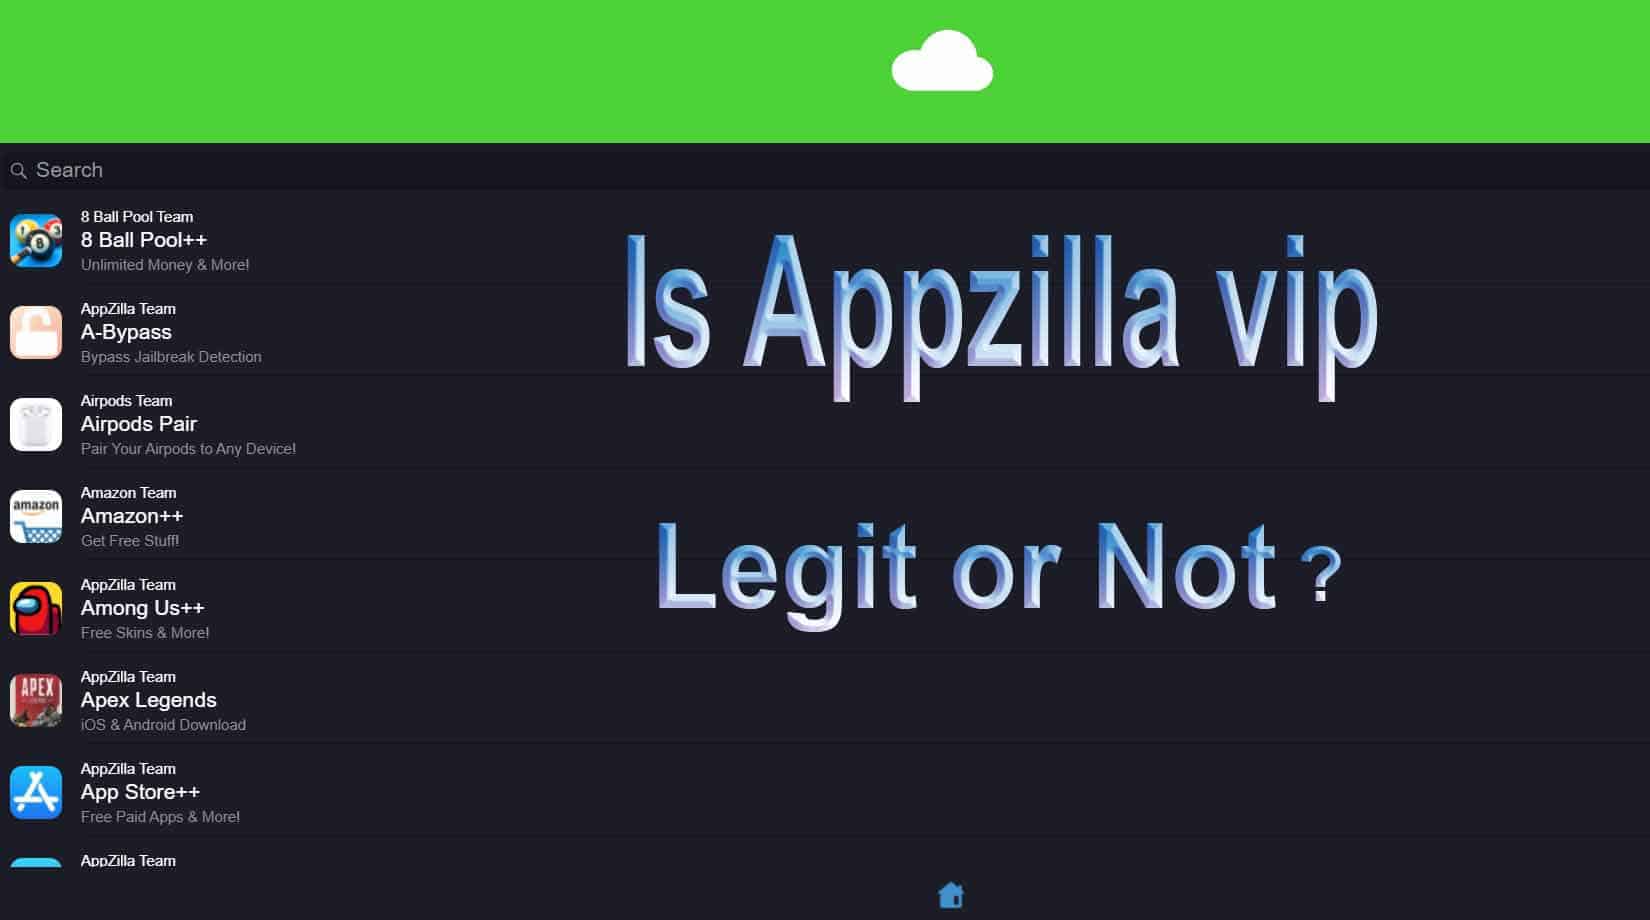 Is Appzilla vip Legal